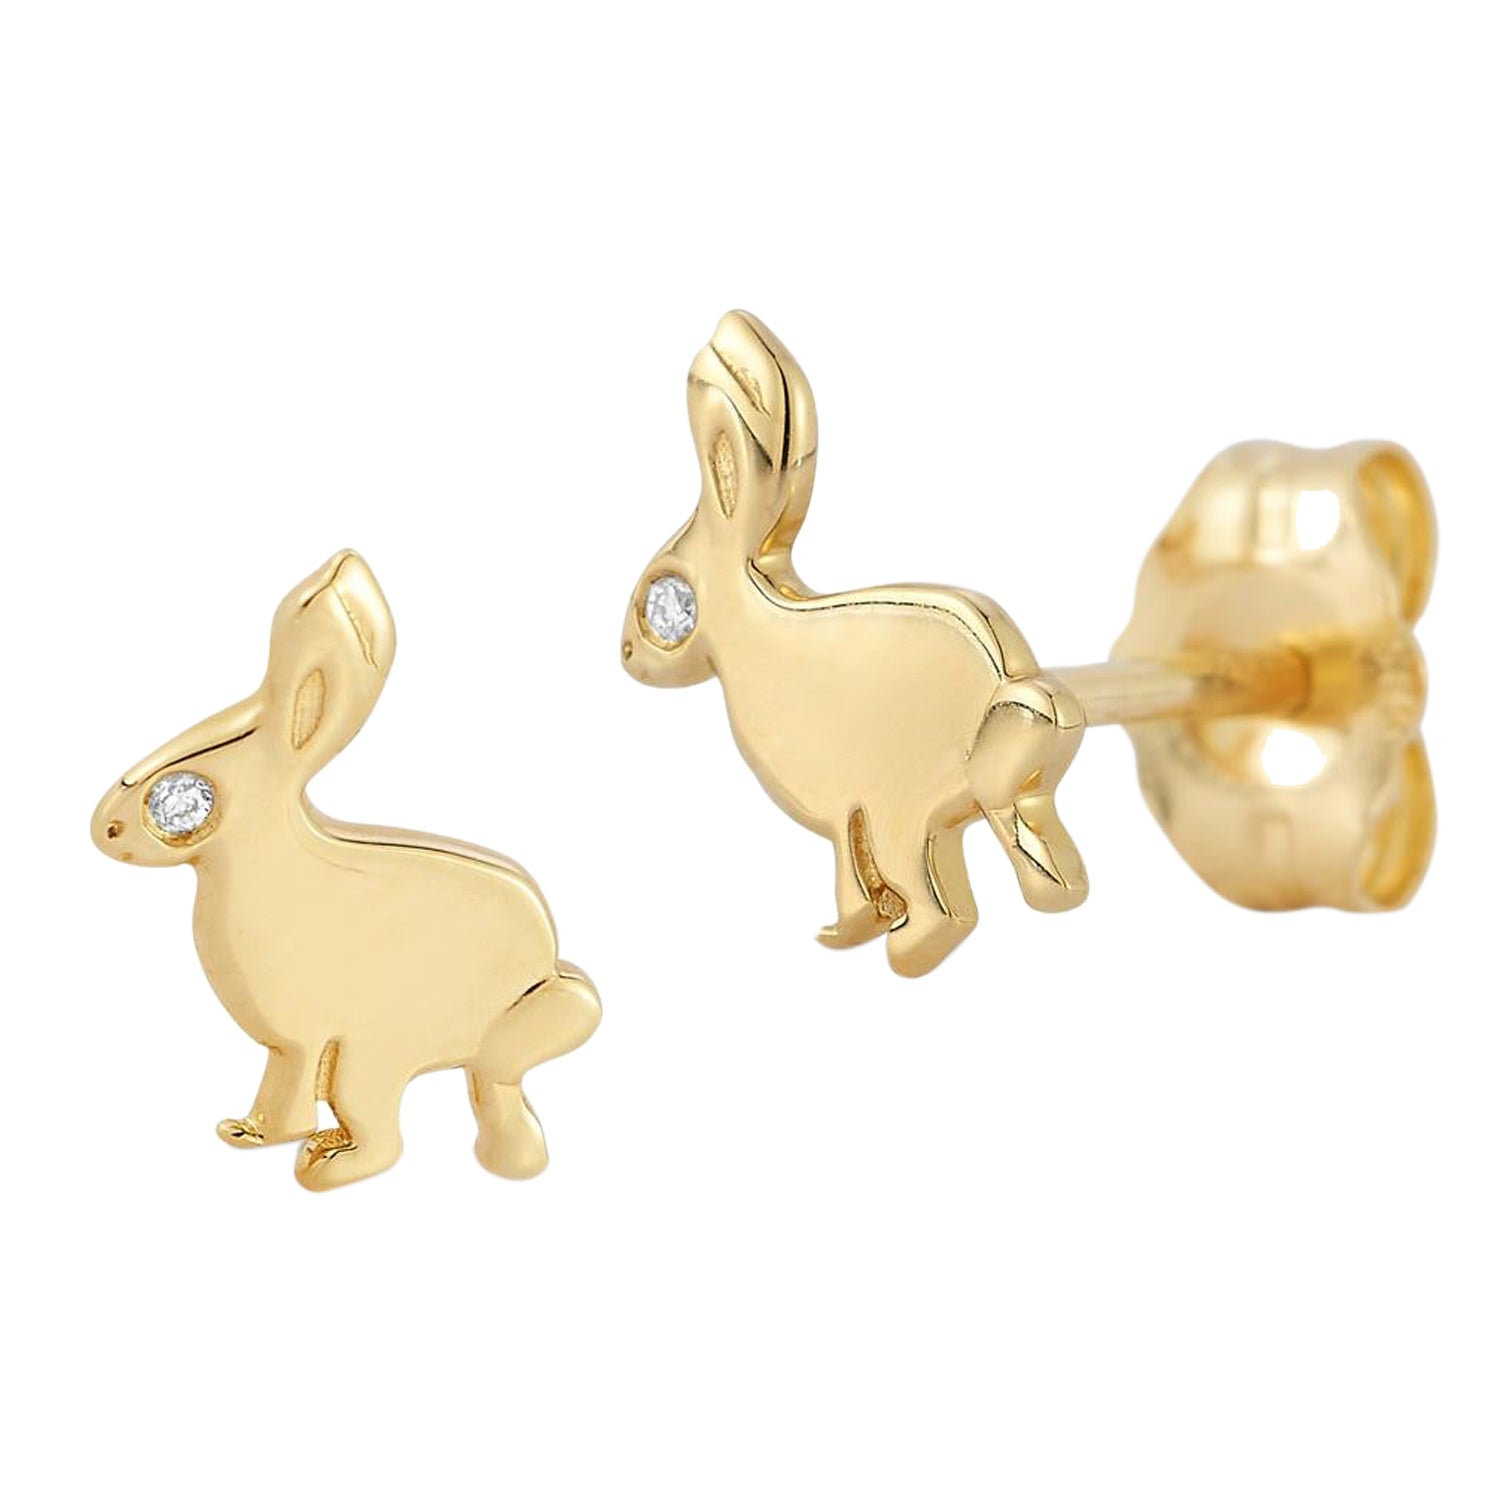 14 karat yellow gold small Bunny stud earrings with diamond eyes